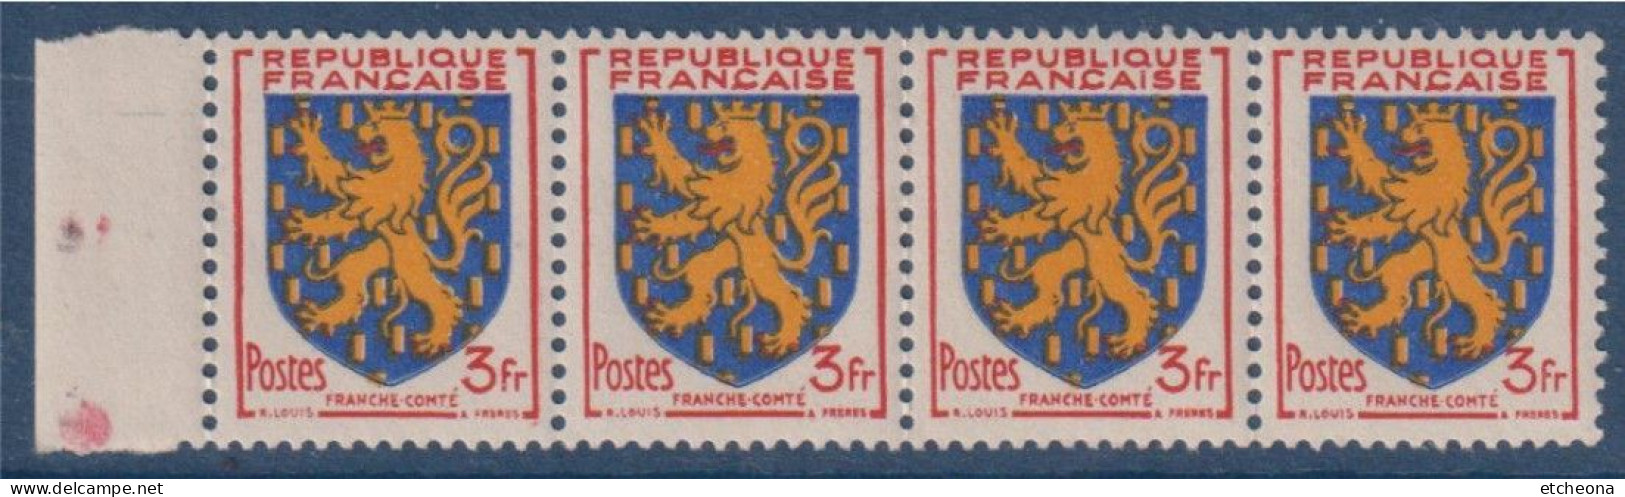 Franche-Comté Armoiries De Provinces V N°903 Bande 4 Timbres Neufs Avec BdF - 1941-66 Stemmi E Stendardi